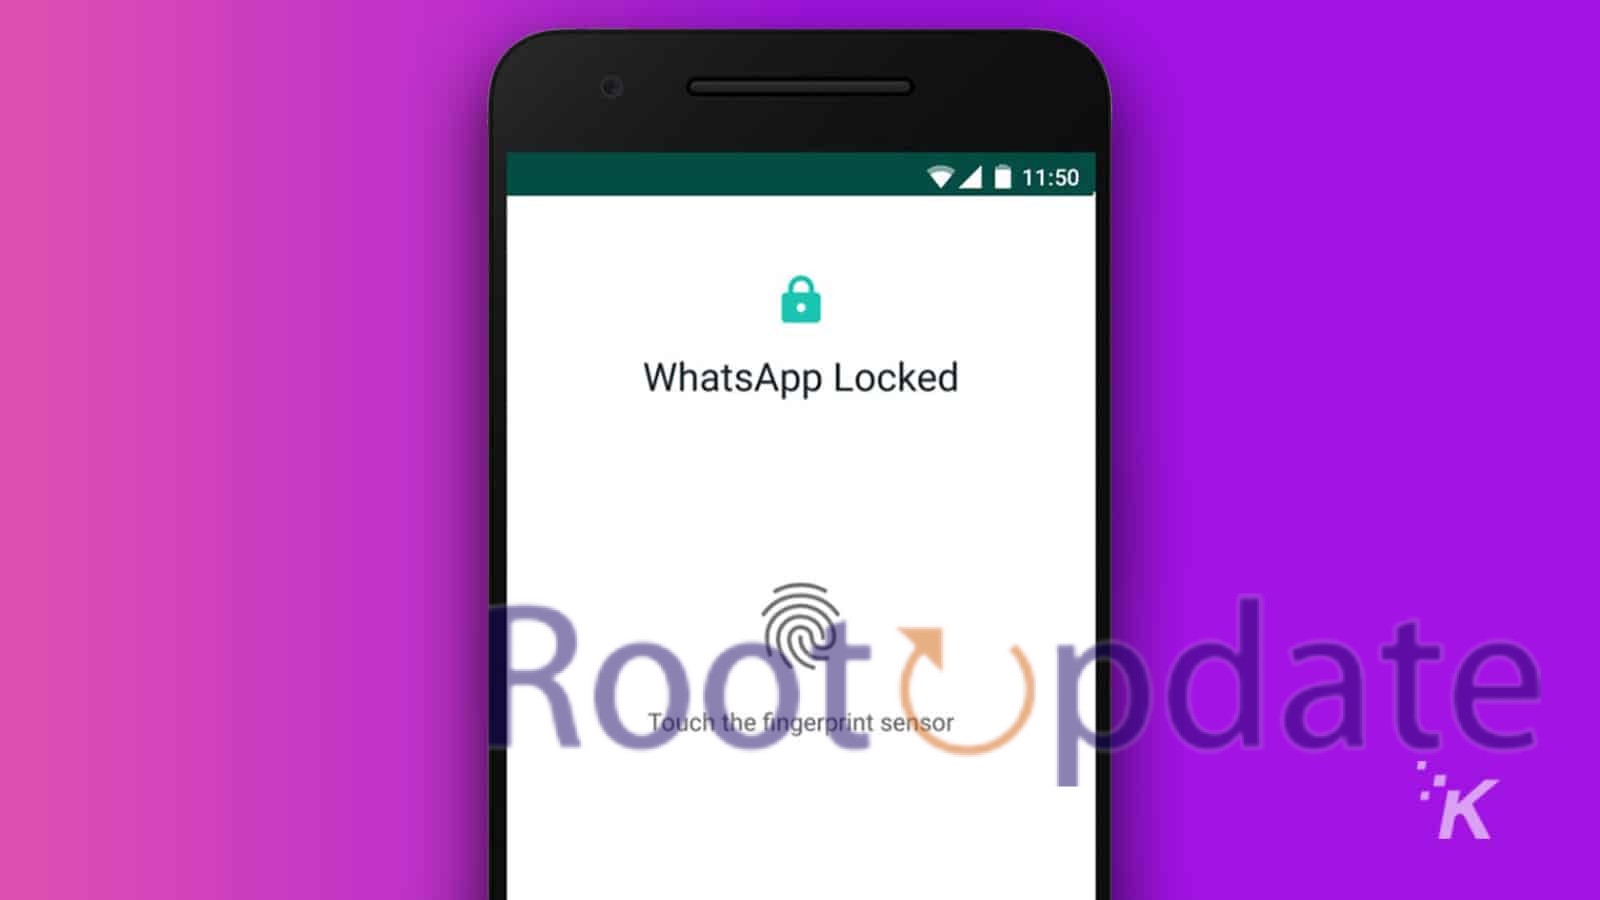 WhatsApp Fingerprint Lock not working [Fix]